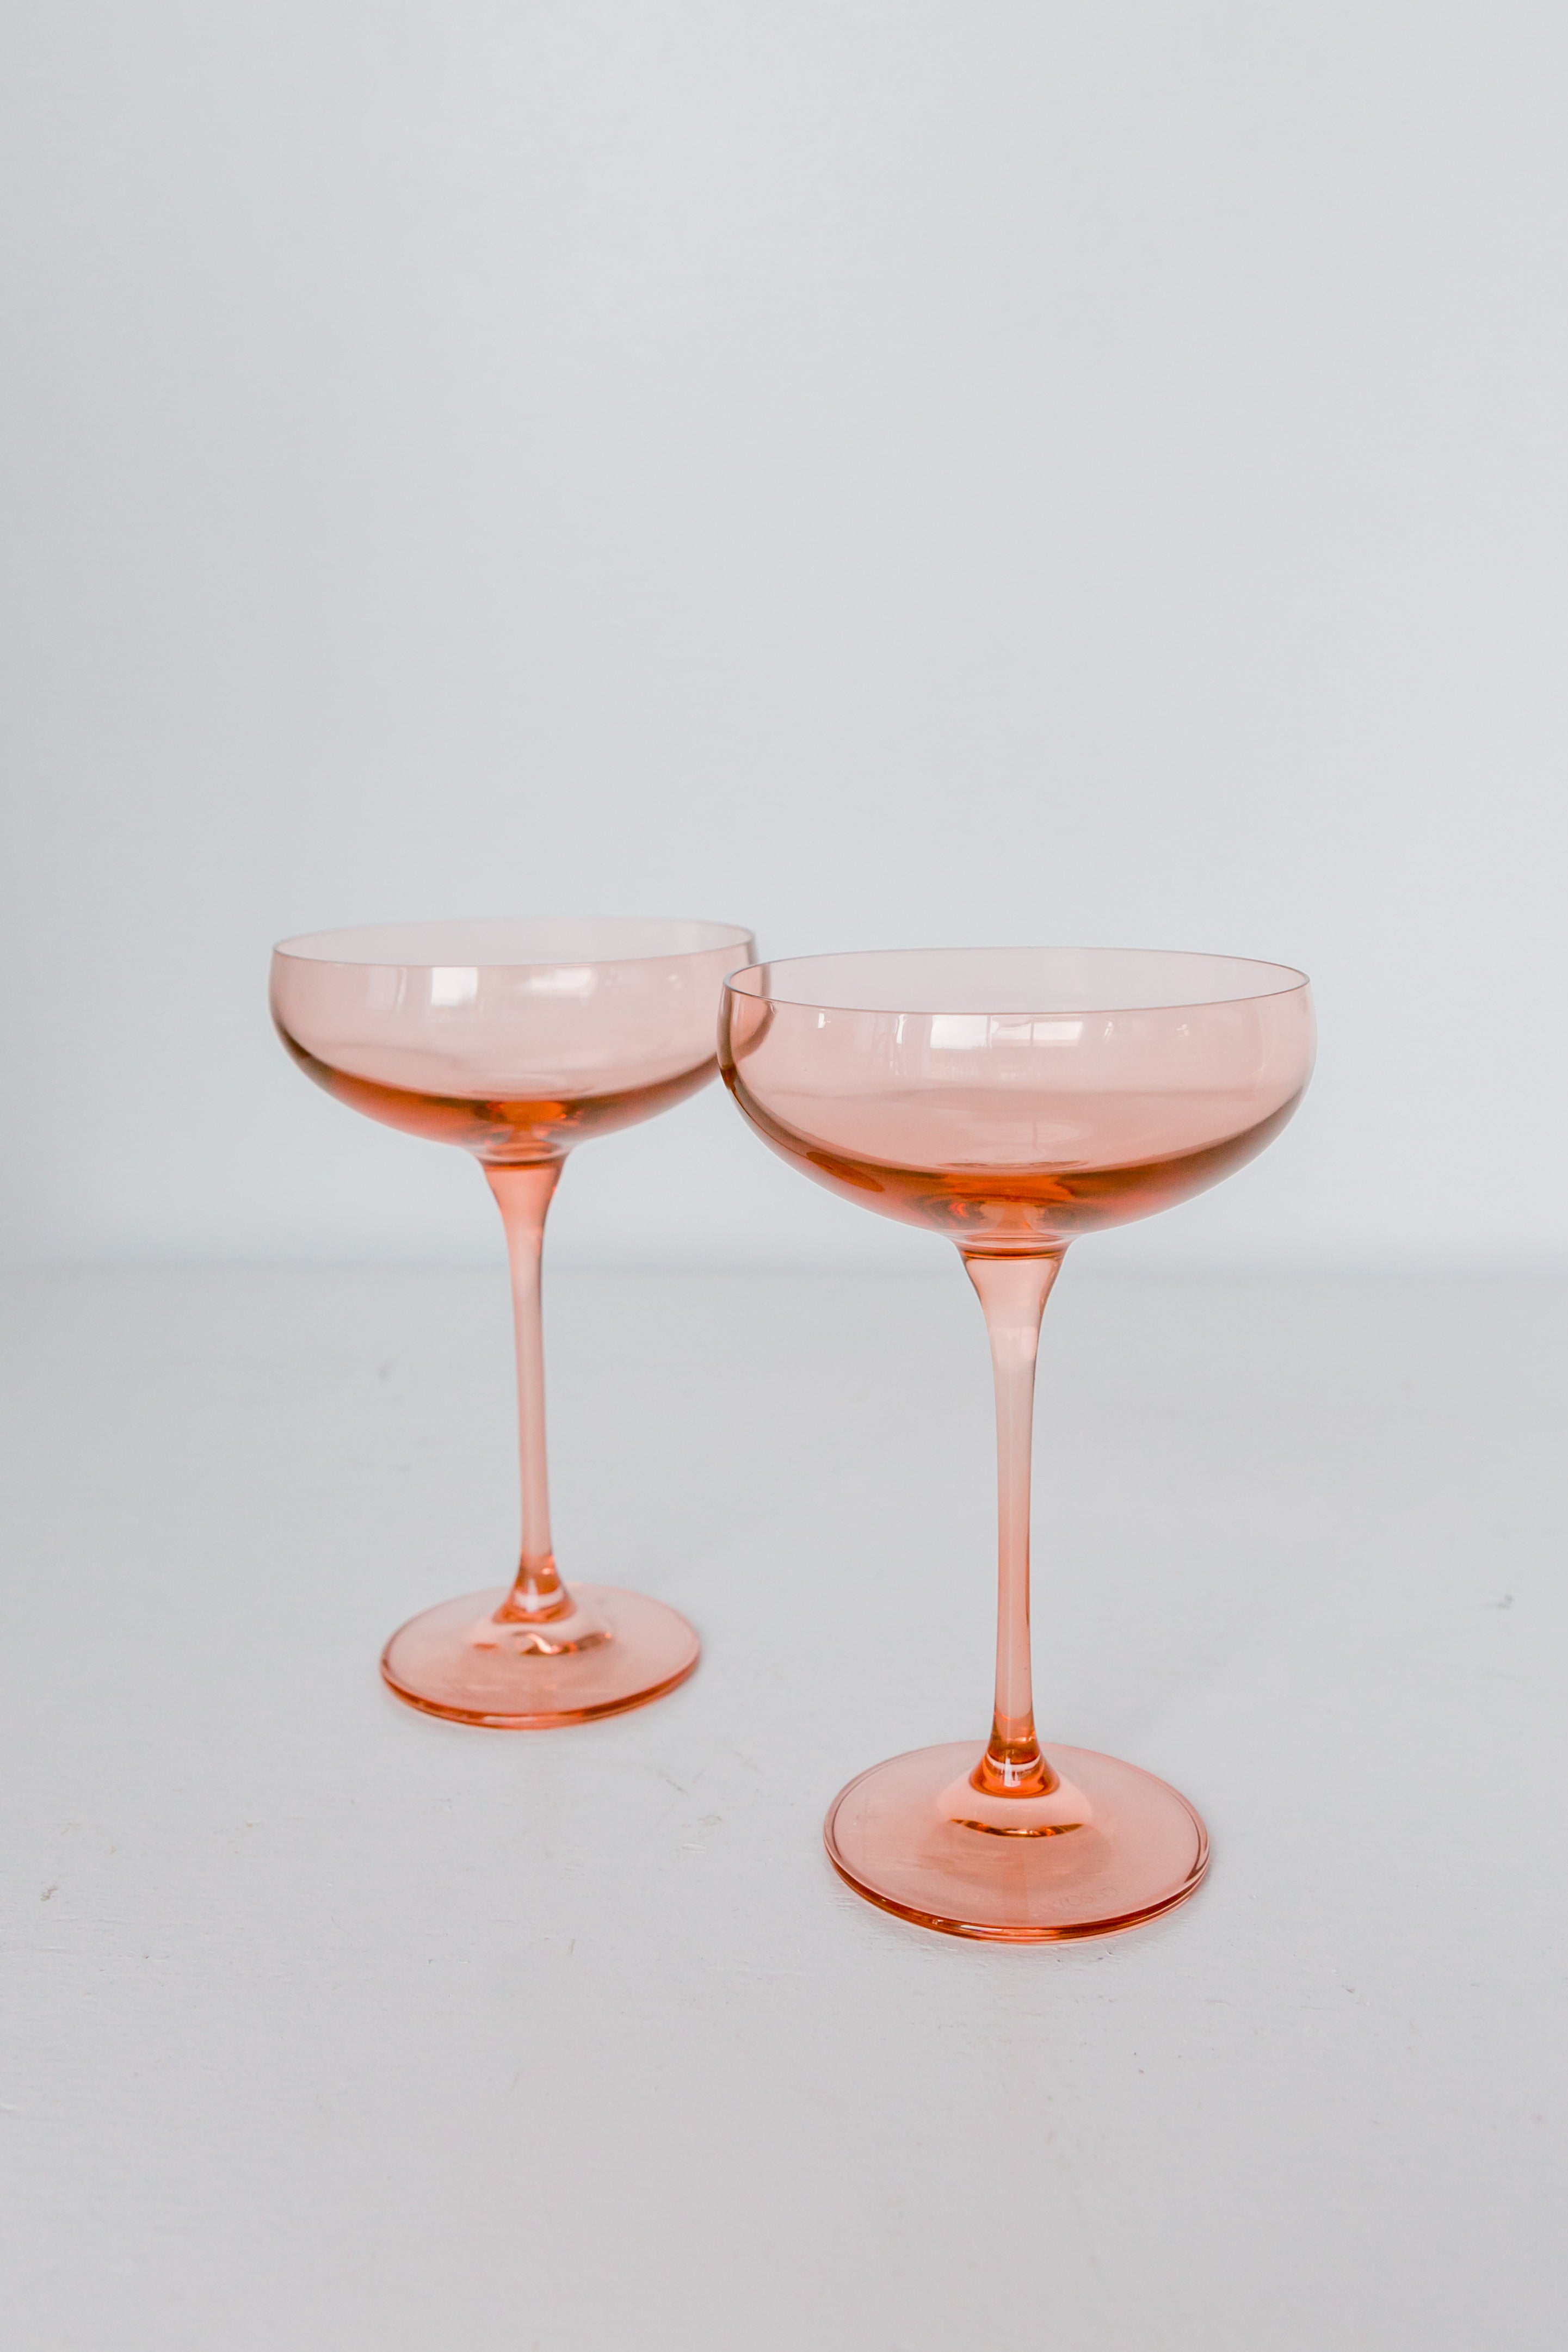 Estelle Colored Champagne Coupe Stemware - Set of 2 {Blush Pink}